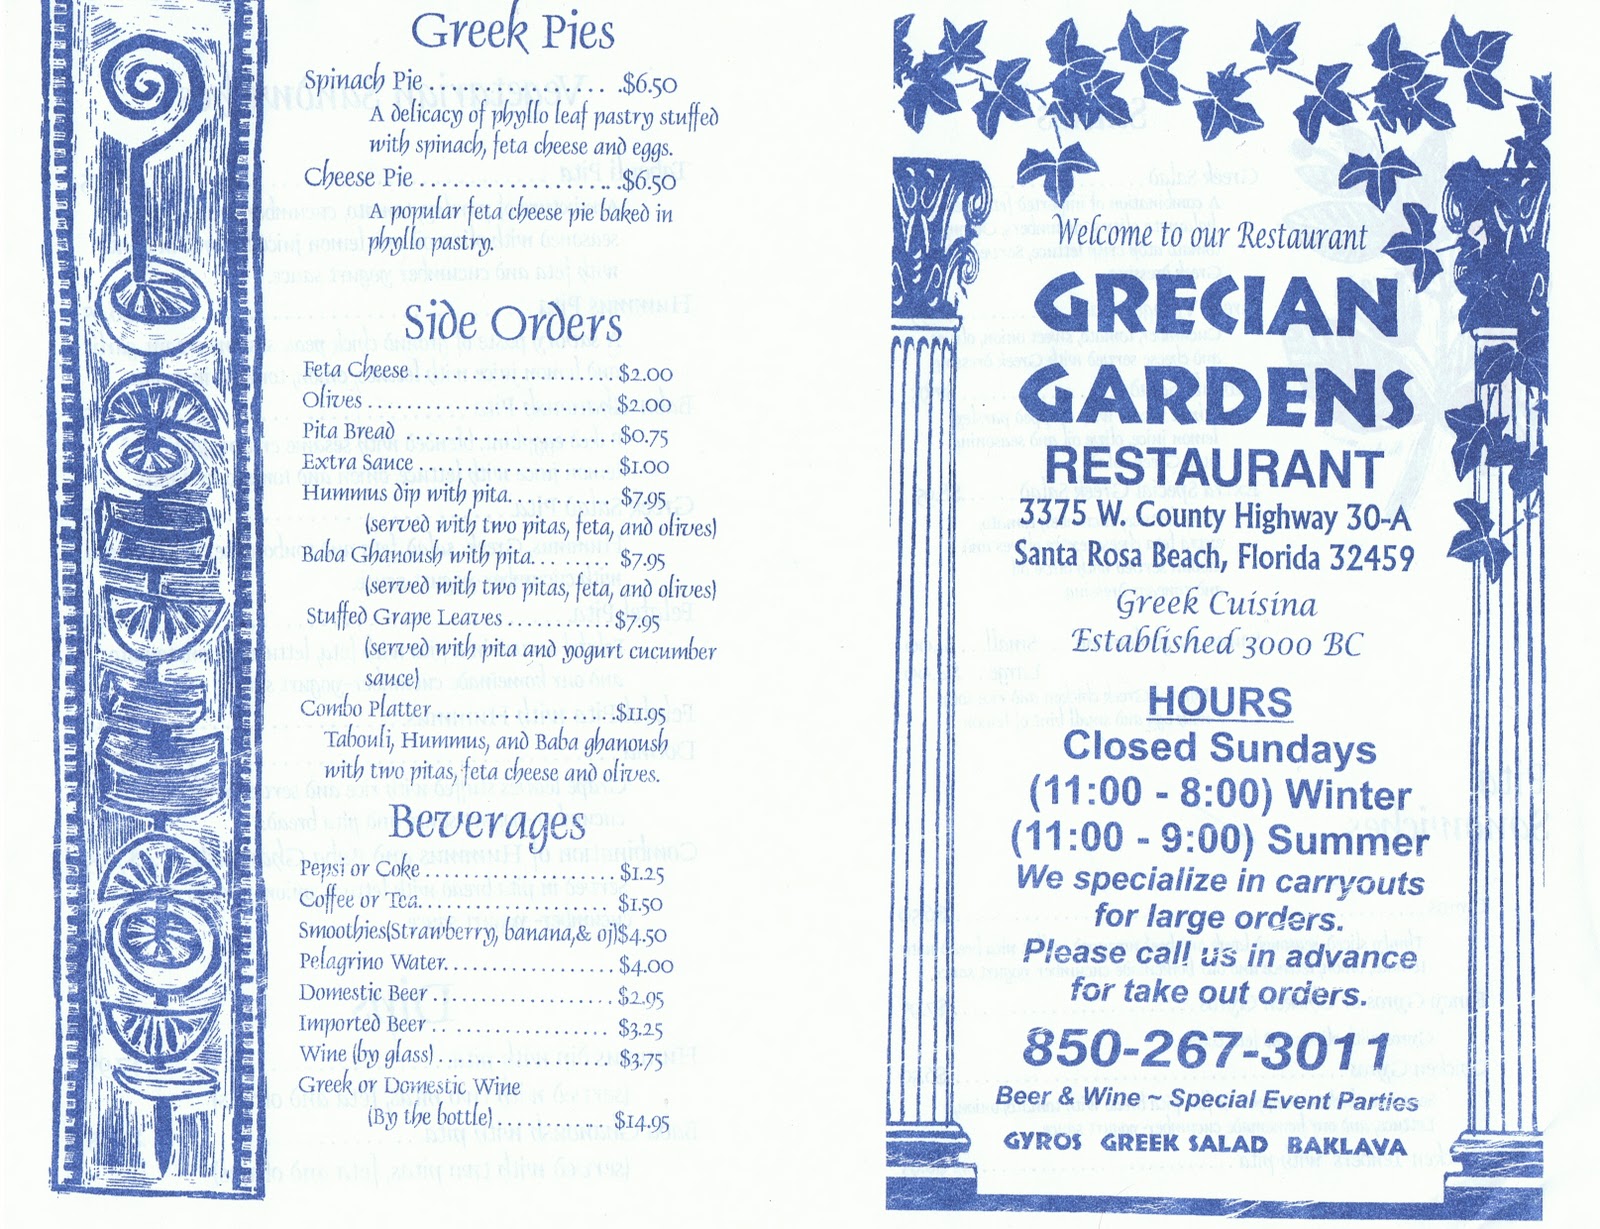 Grecian Gardens Restaurant And Cafe Bouzouki Menu Items